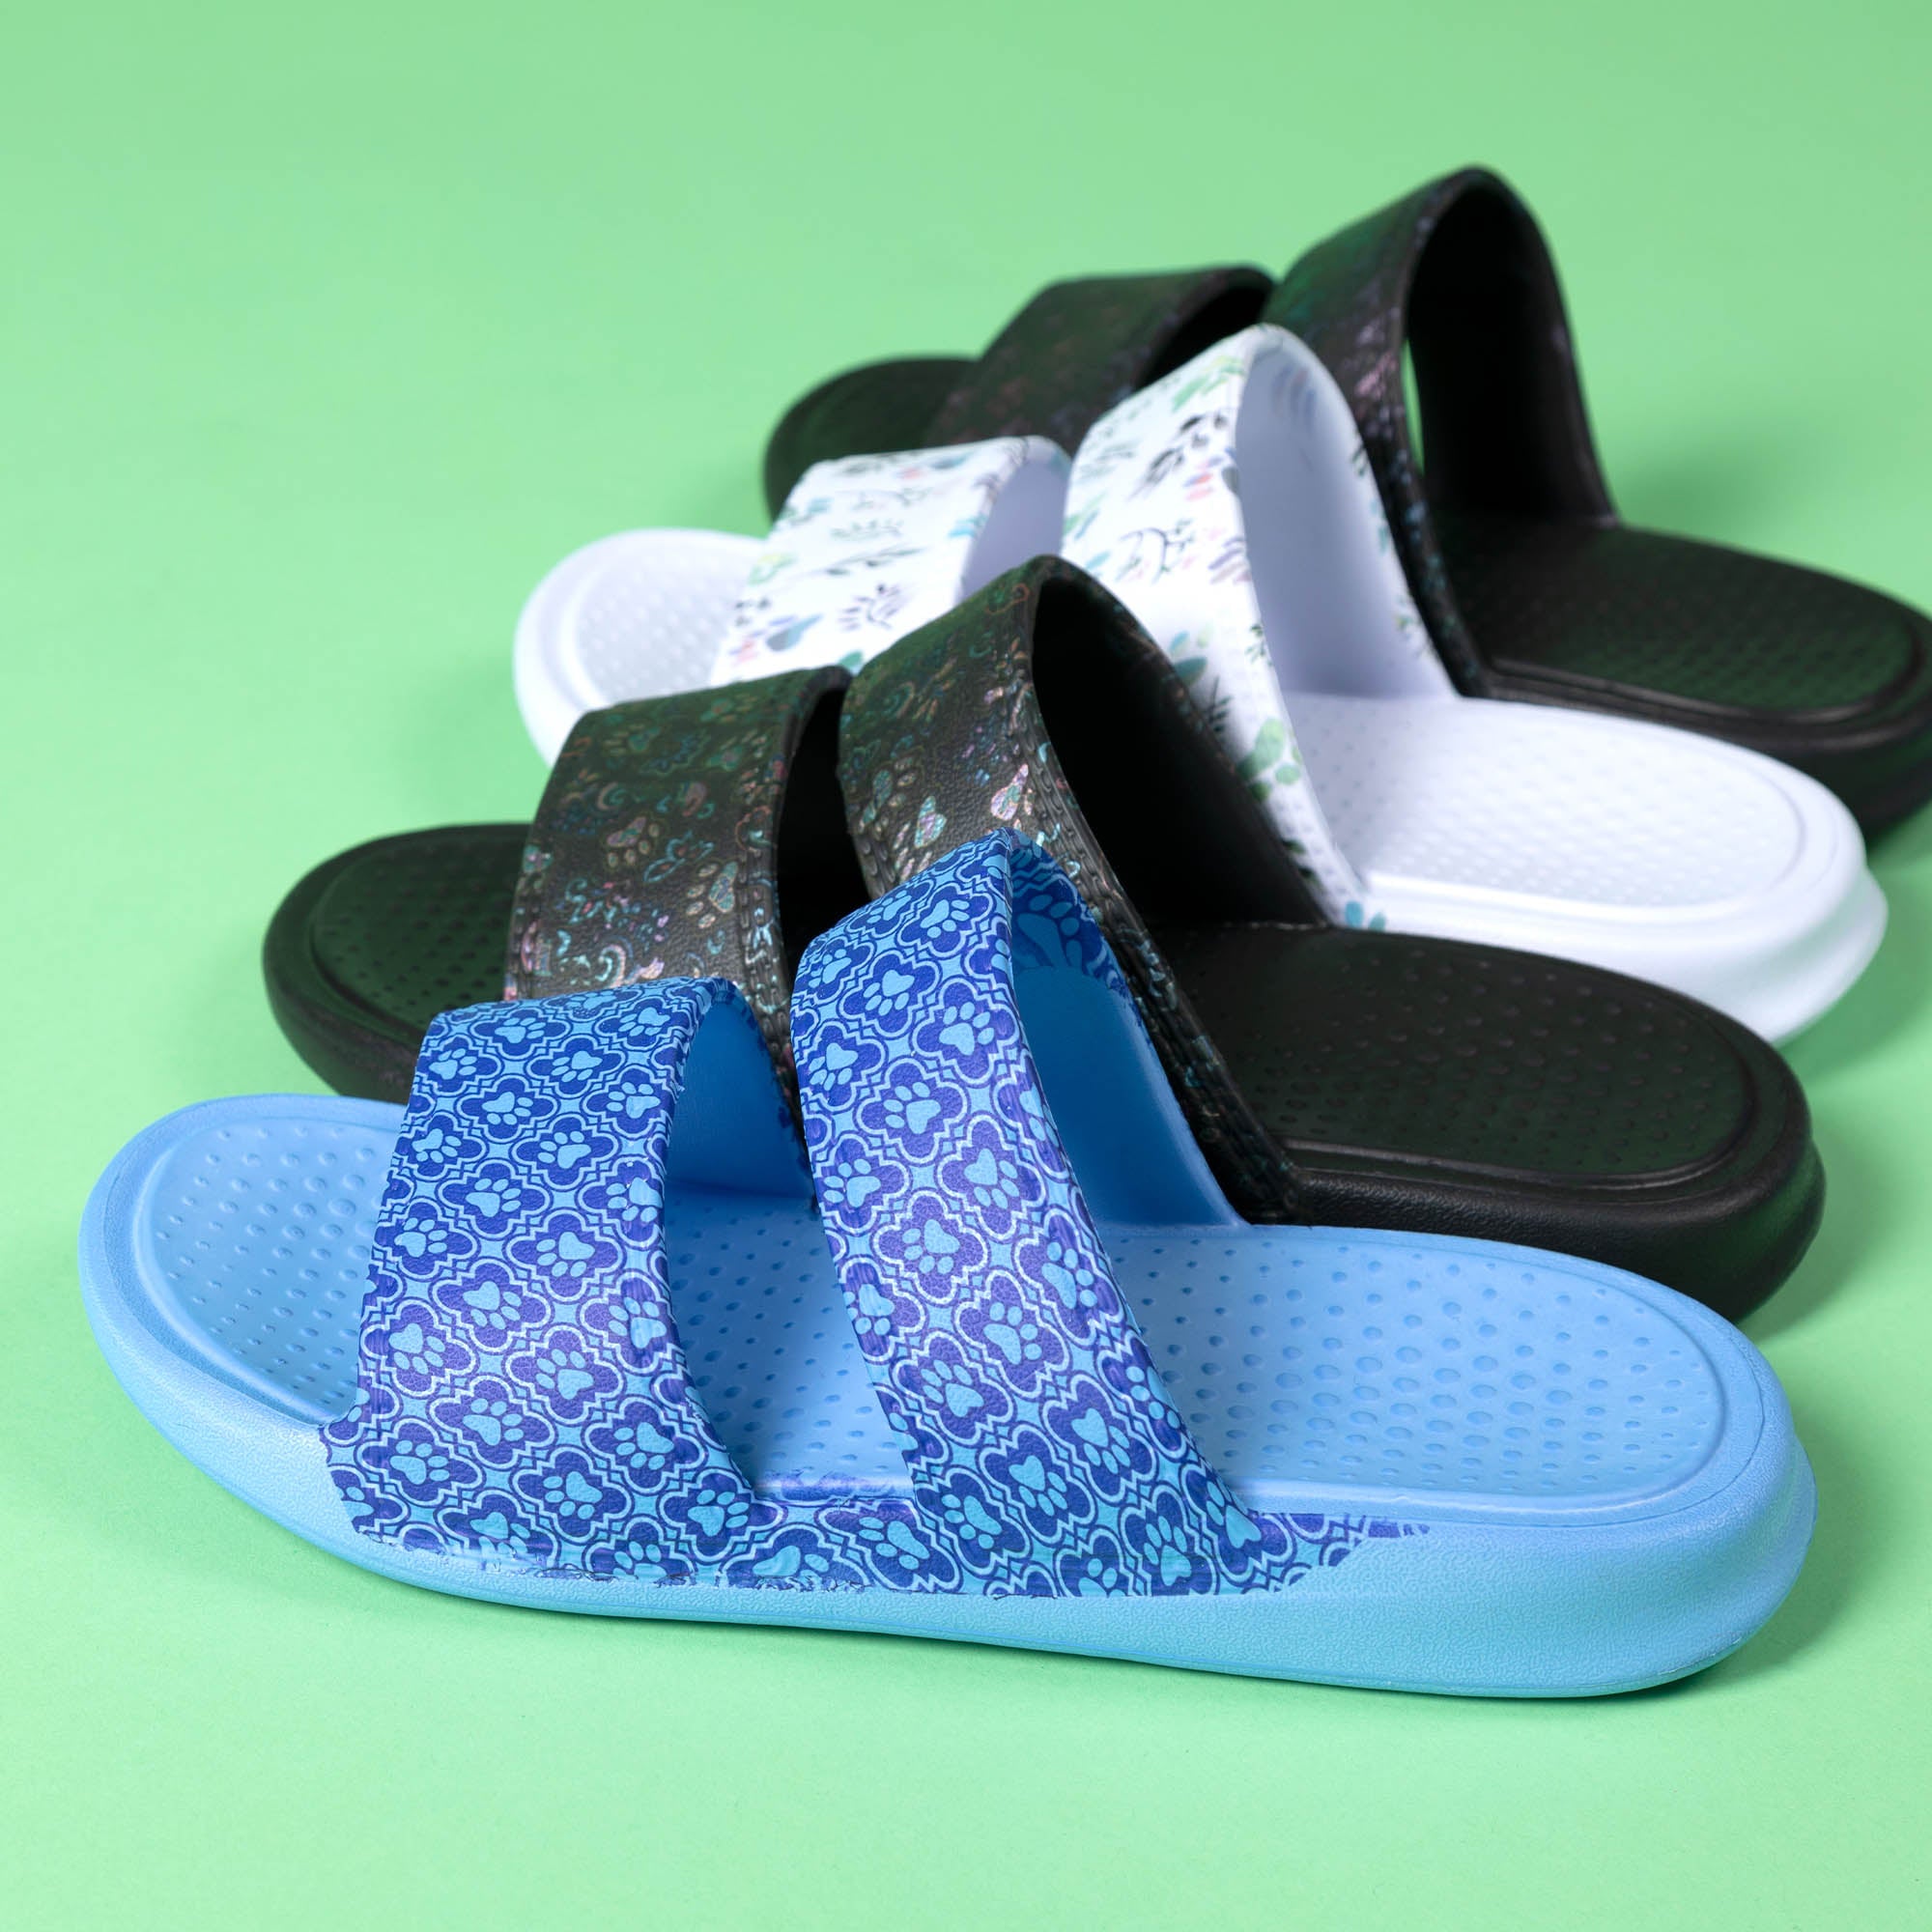 Women's Paw Print Two-Strap Slide Sandals - Lattice Paws - 10